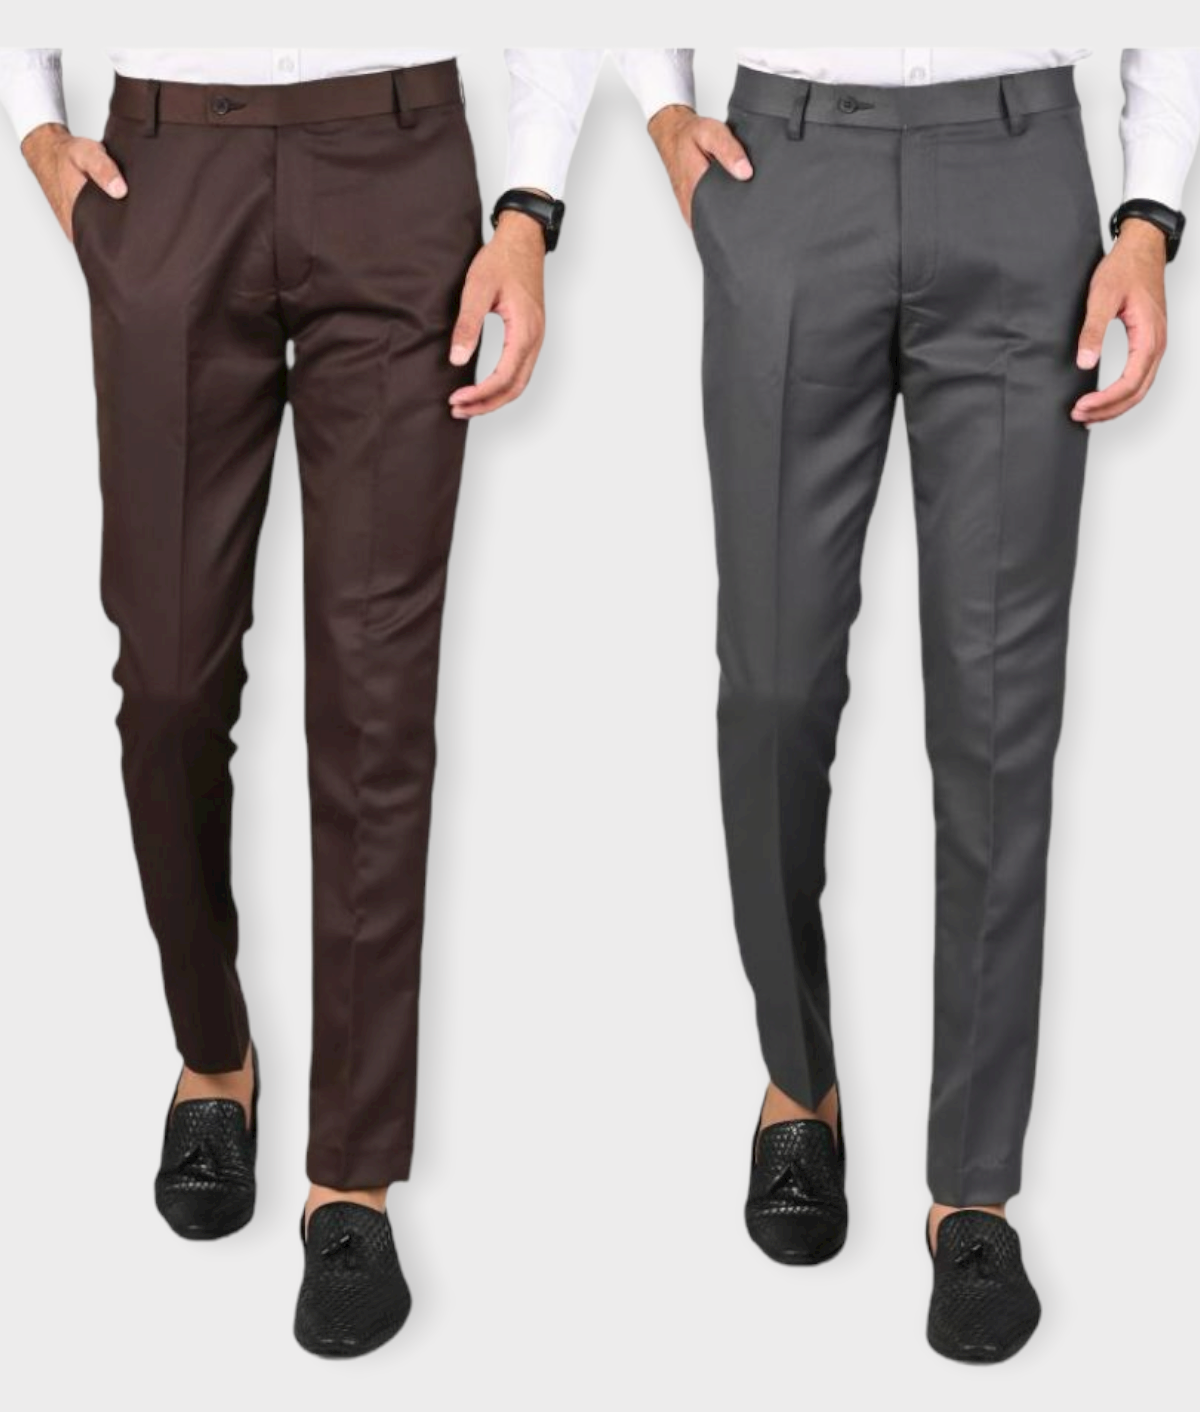     			MANCREW - Dark Grey Polycotton Slim - Fit Men's Formal Pants ( Pack of 2 )